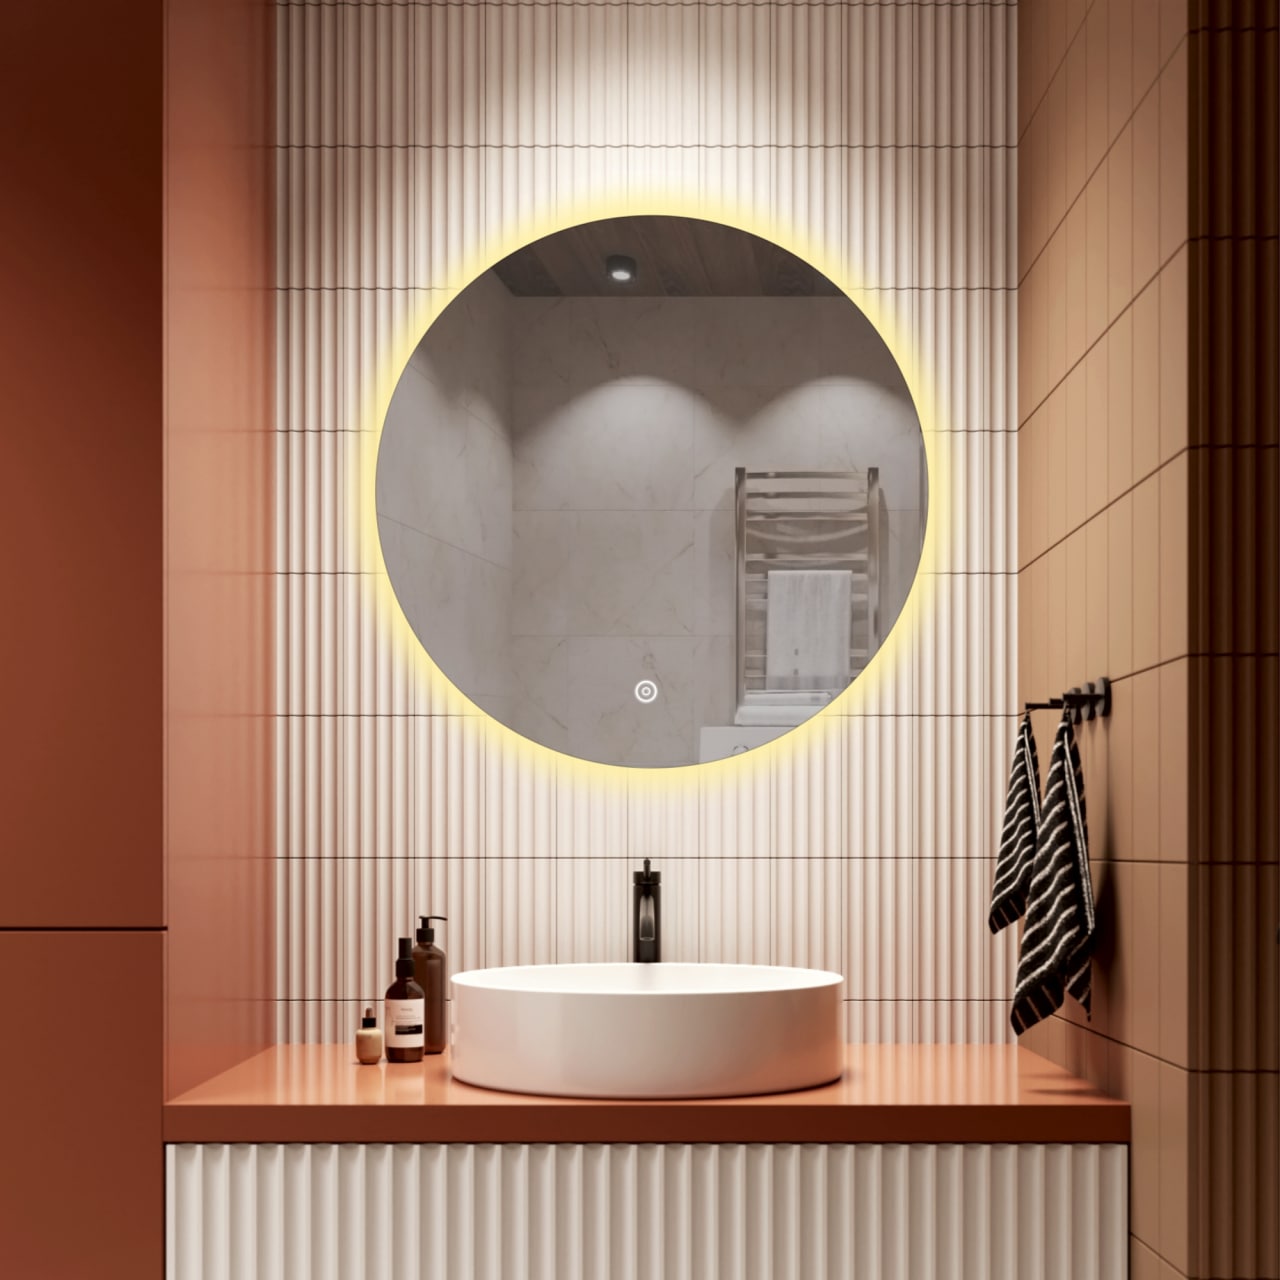 Зеркало для ванной Alfa Mirrors с теплой подсветкой 3200К круглое 80см, арт. Na-8Na-8t